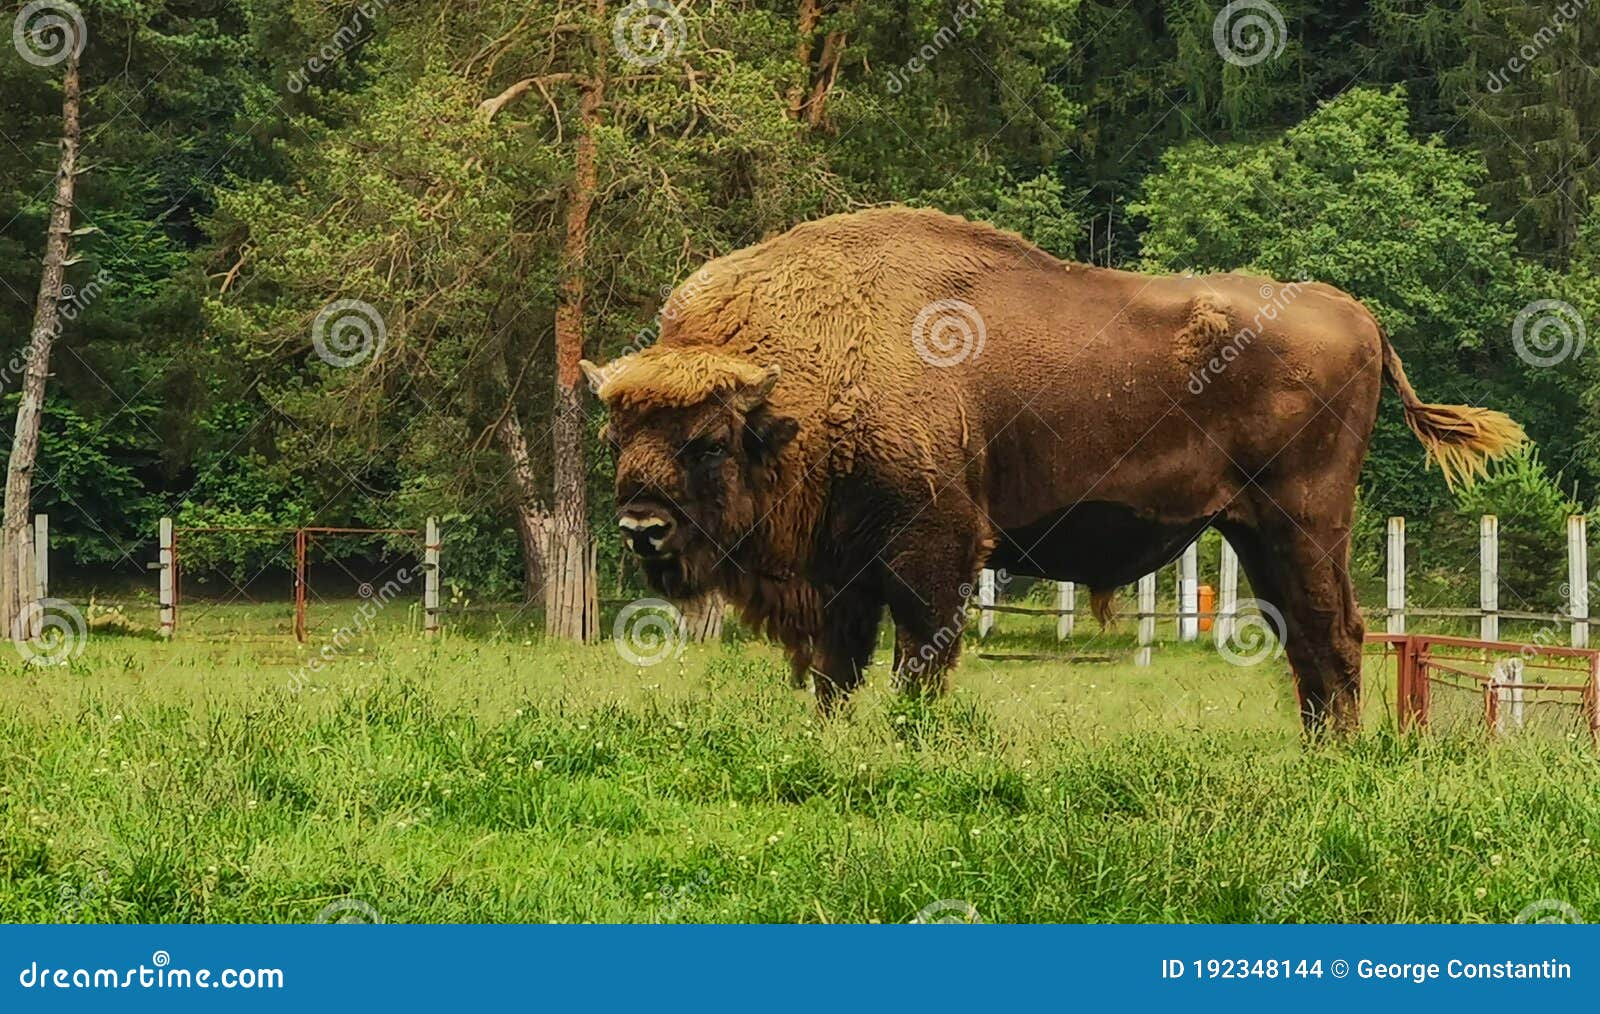 a beautiful european bison exemplar